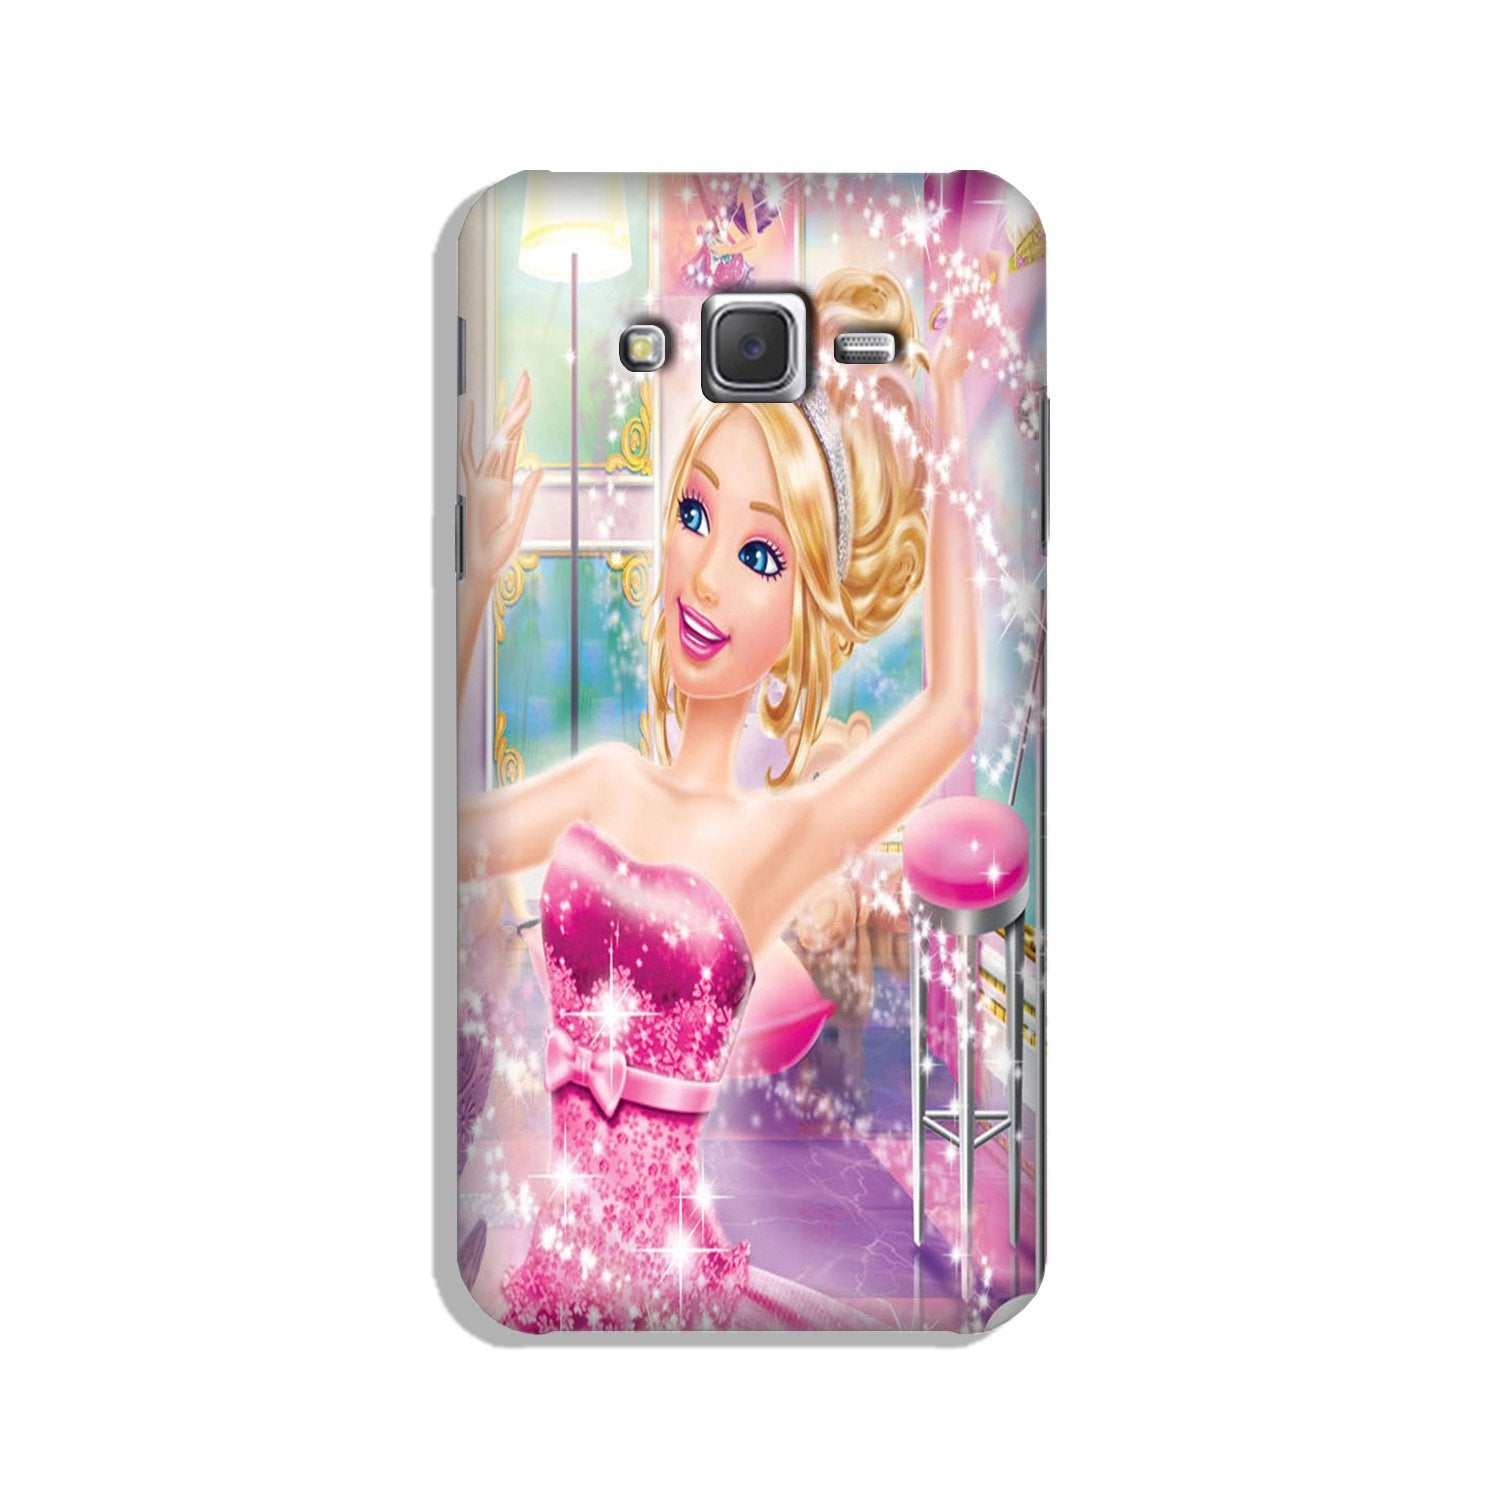 Princesses Case for Galaxy J2 (2015)